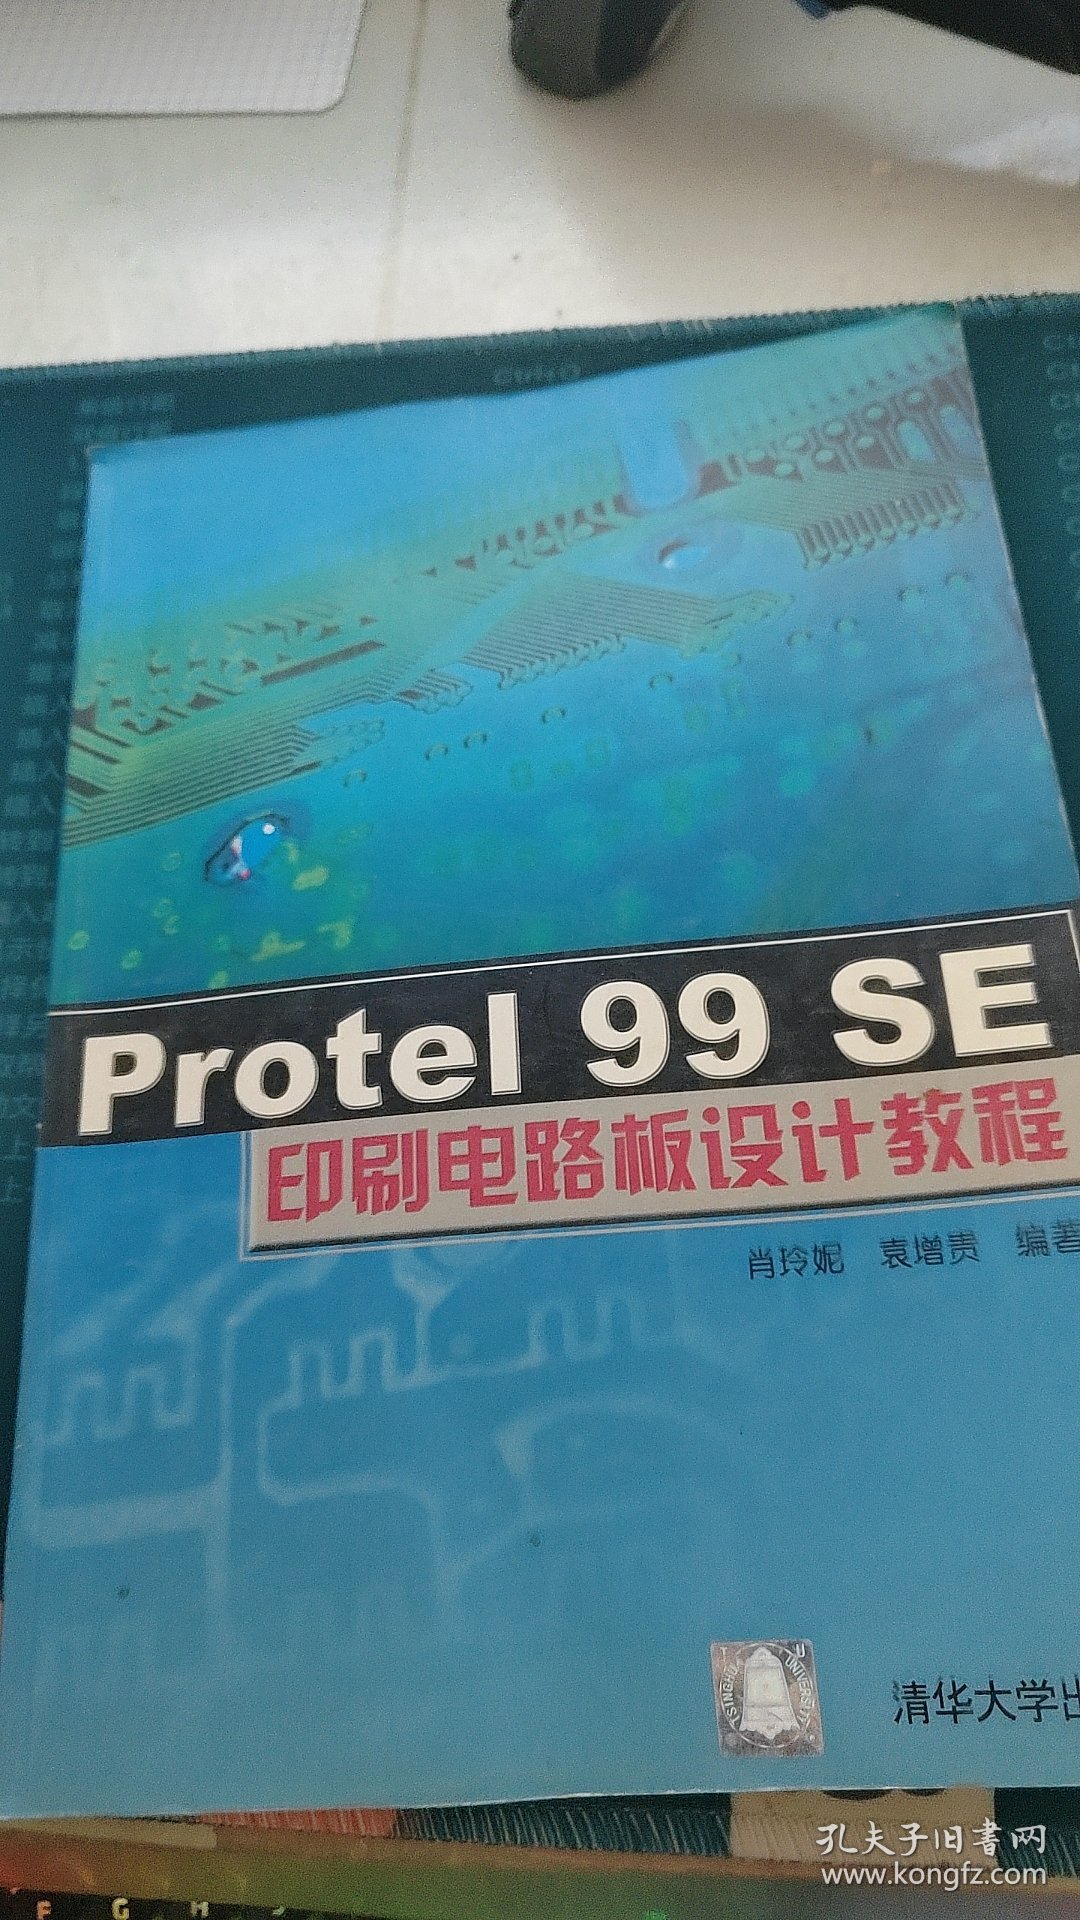 Protel 99 SE印刷电路板设计教程